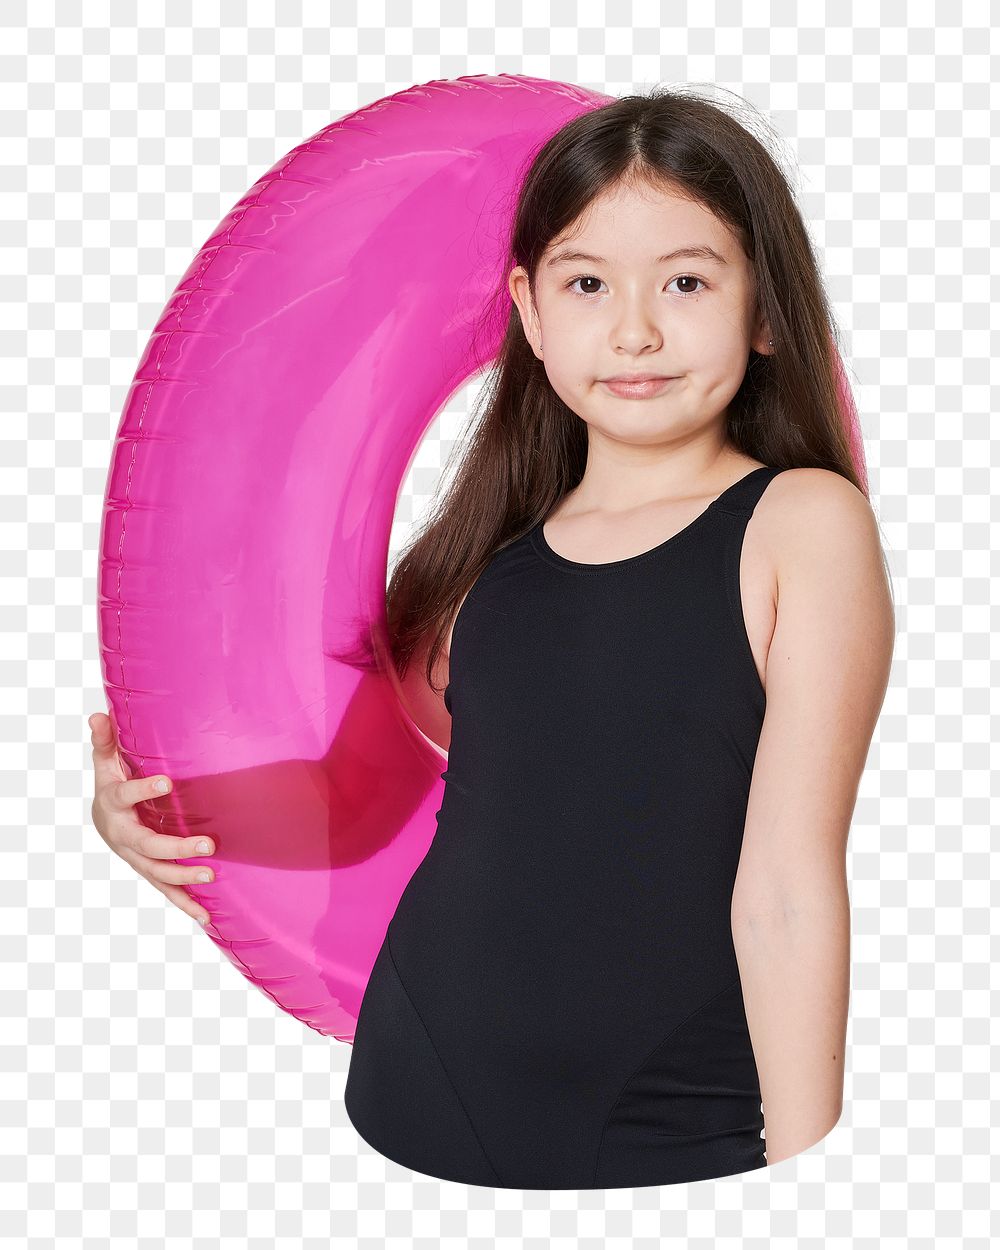 Png kid wearing swimwear sticker, transparent background